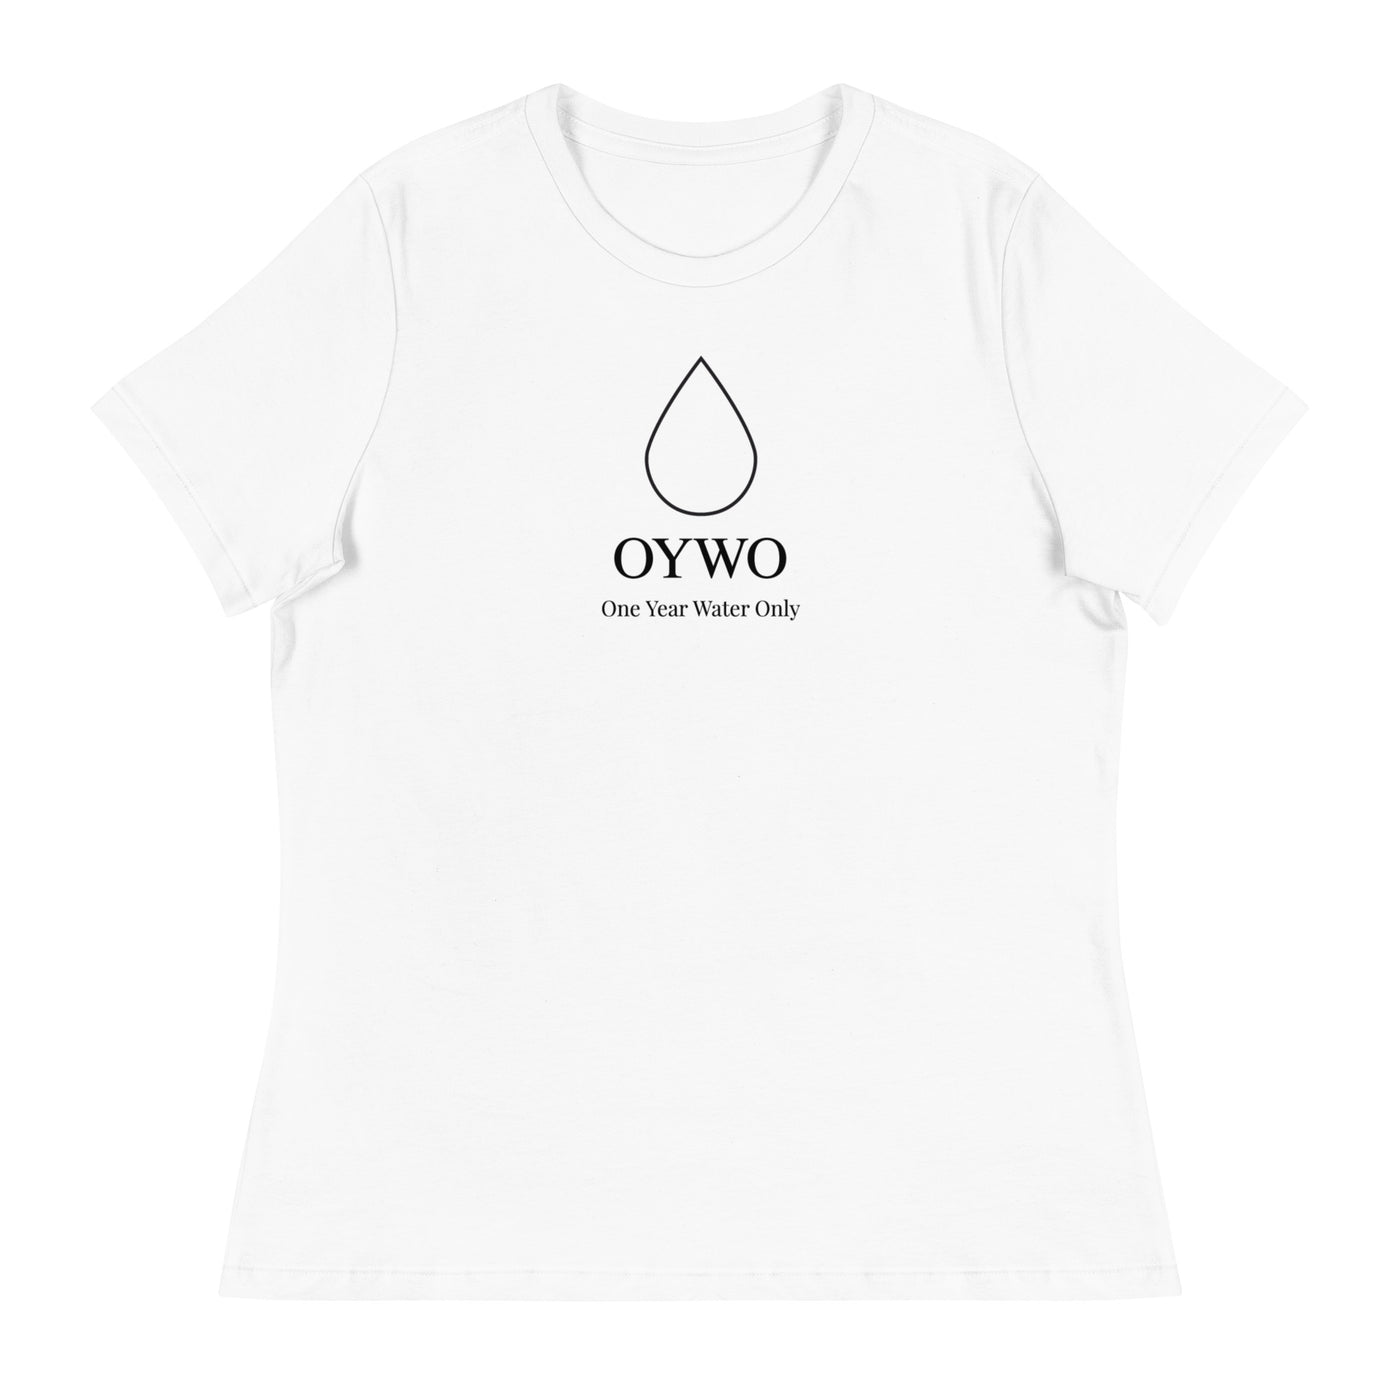 OYWO White Women's T-Shirt